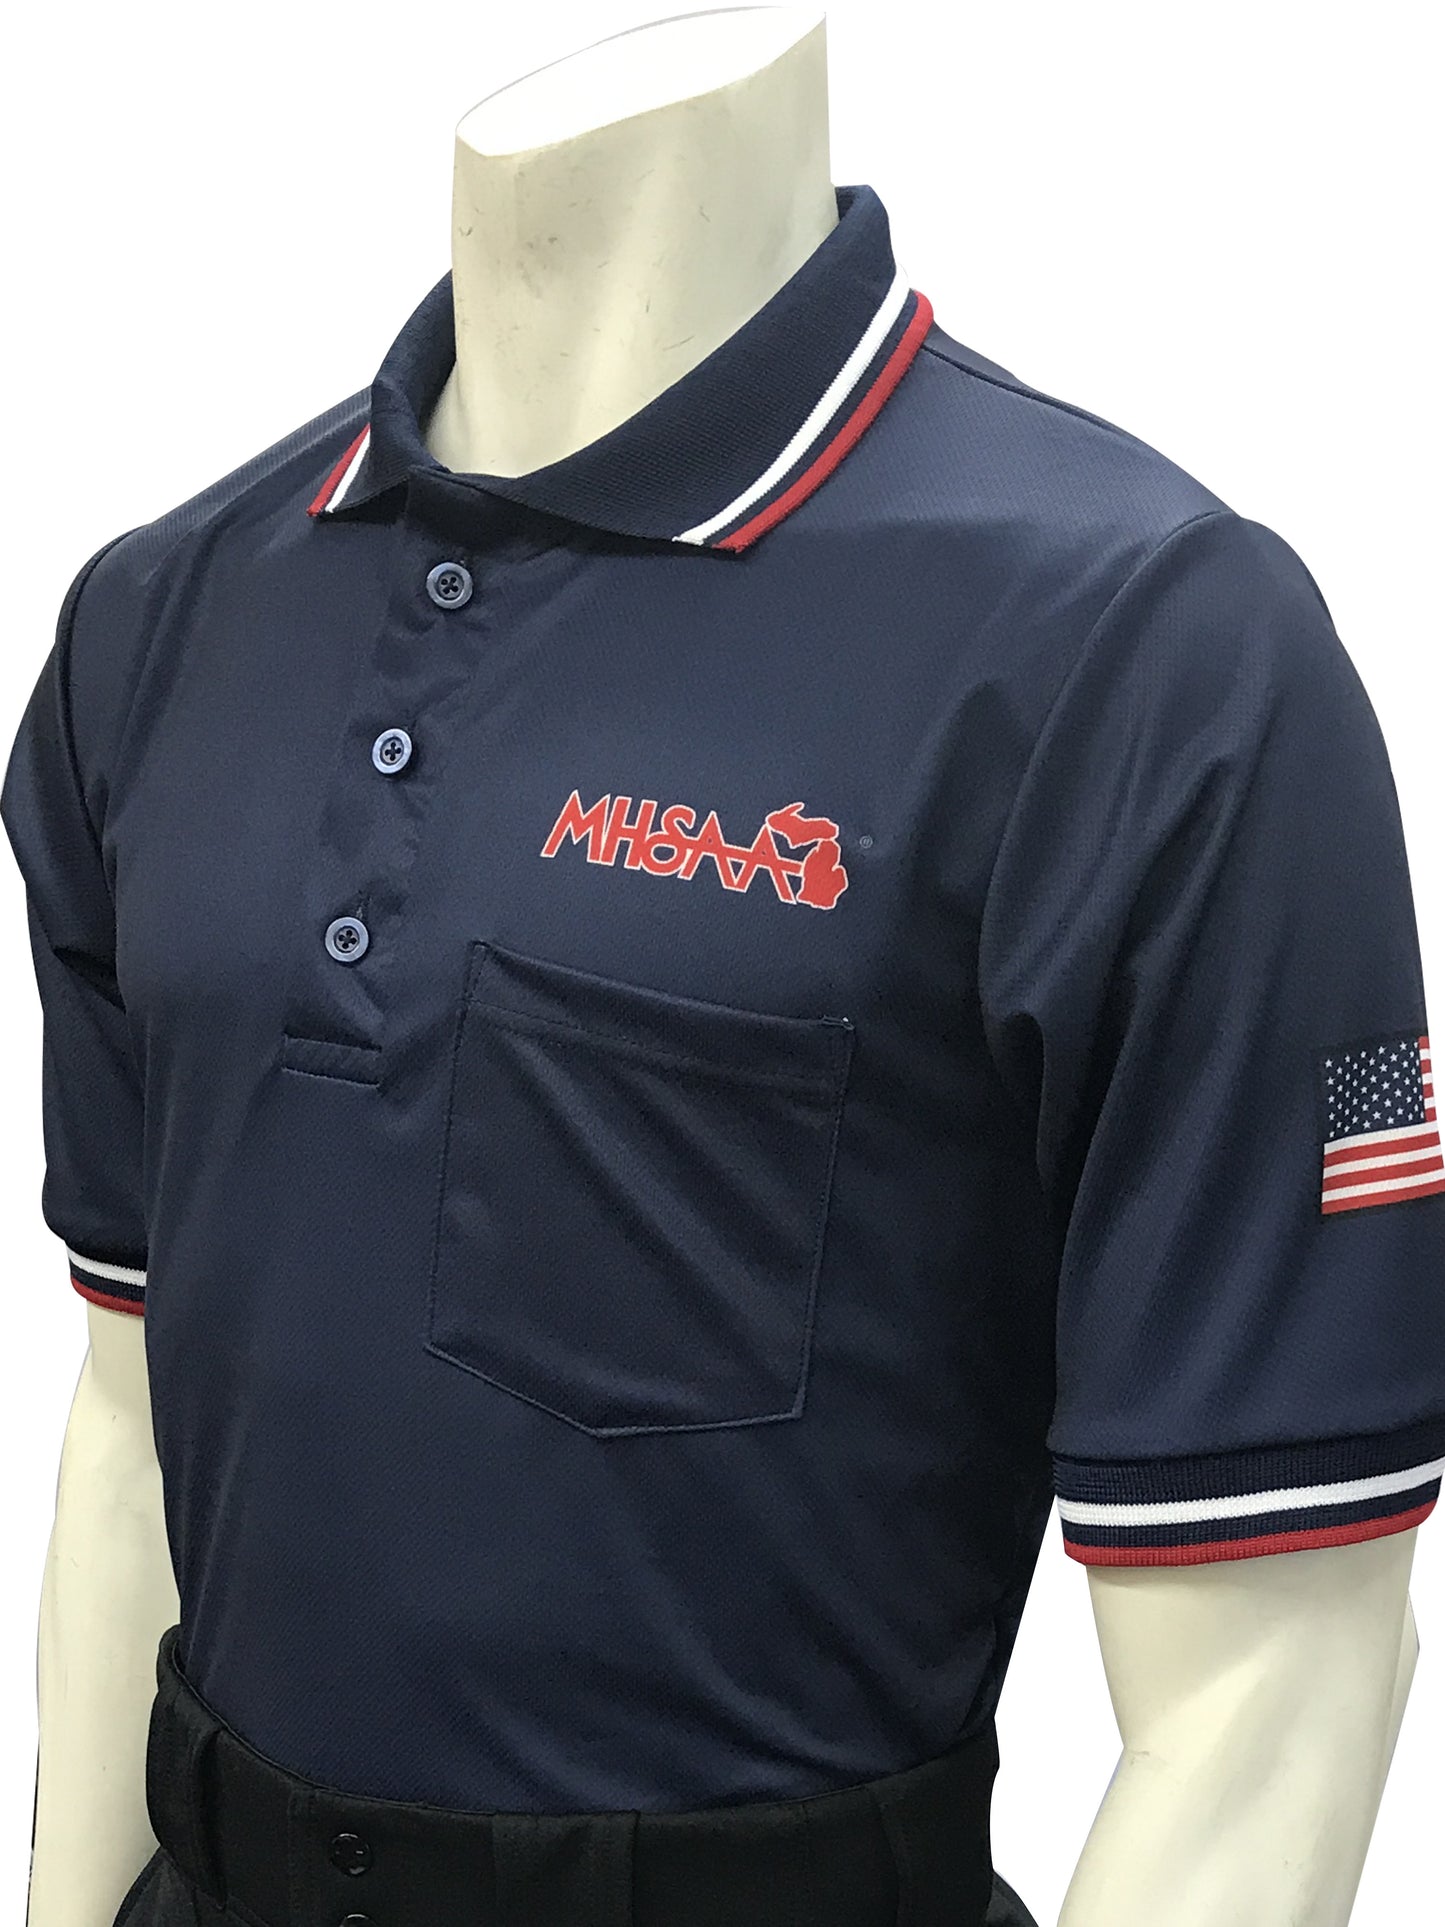 USA300MI NY-Smitty USA - Dye Sub Michigan Baseball Short Sleeve Navy Shirt